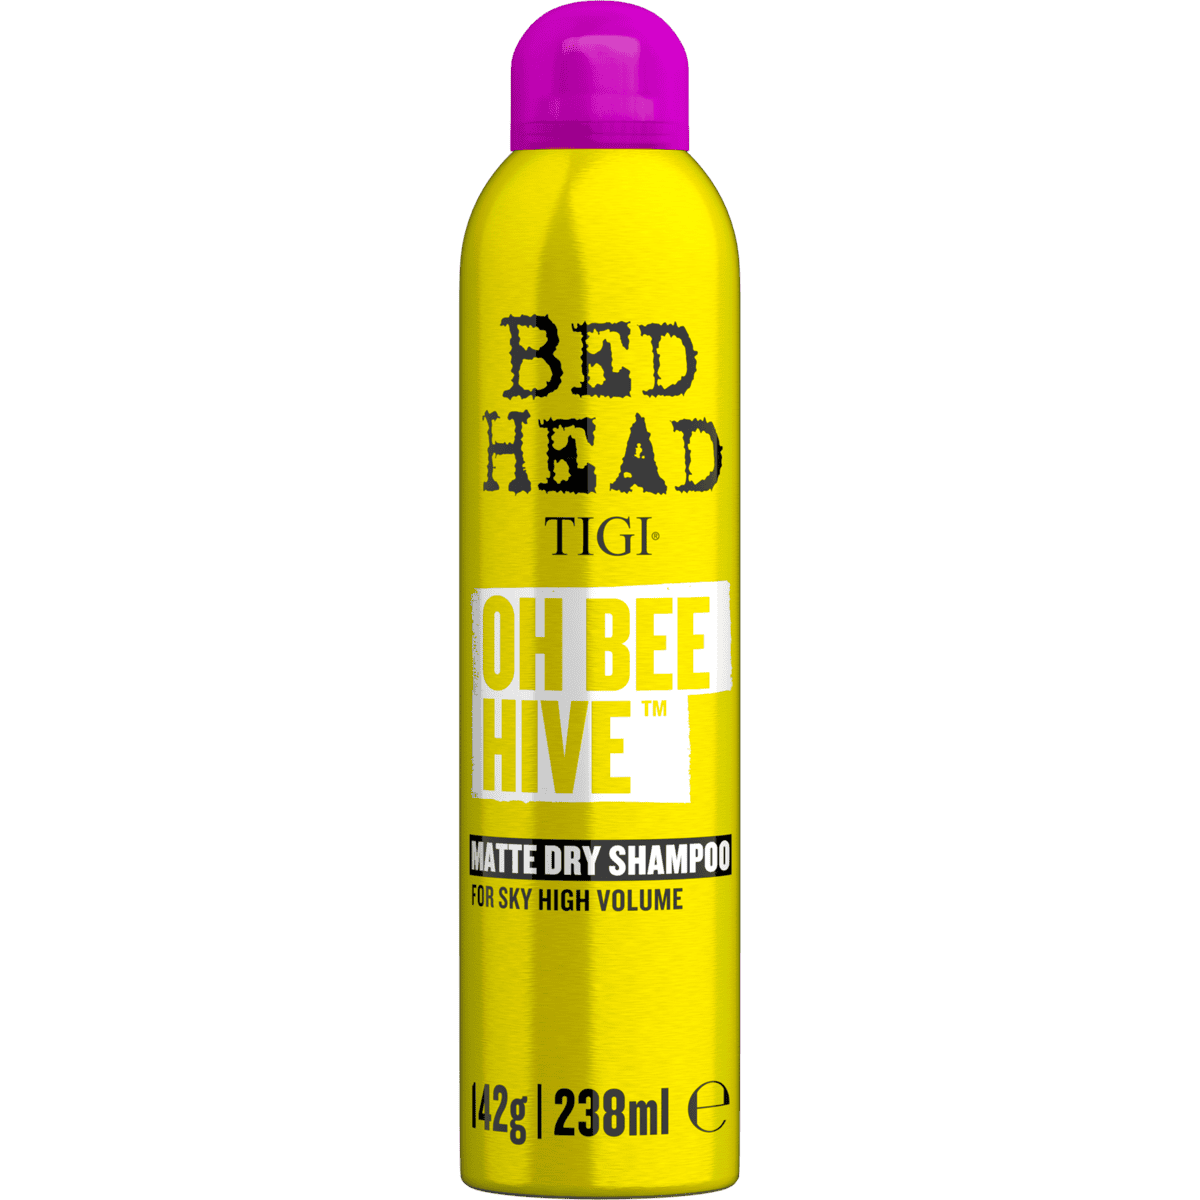 TIGI Bed Head Oh Bee Hive Dry Shampoo 238 ml New